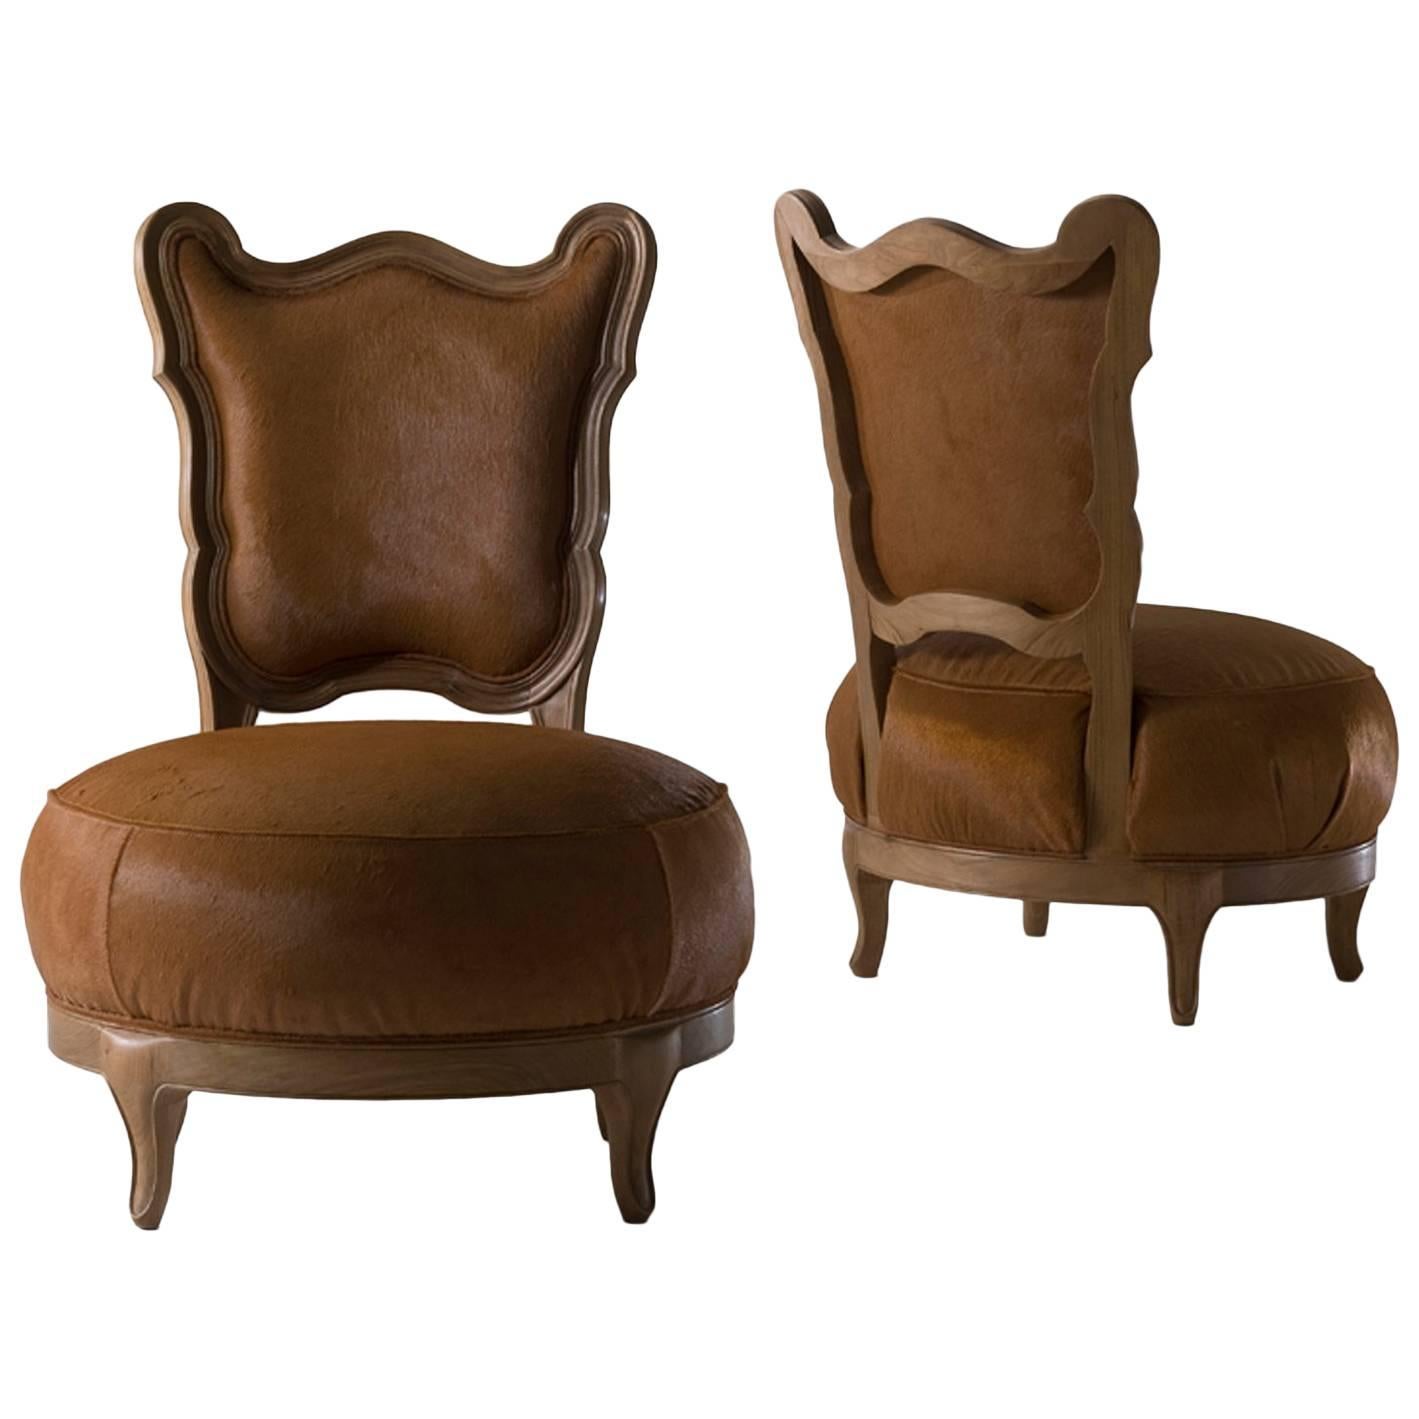 Gattone - solid walnut armchair, designed by Nigel Coates For Sale